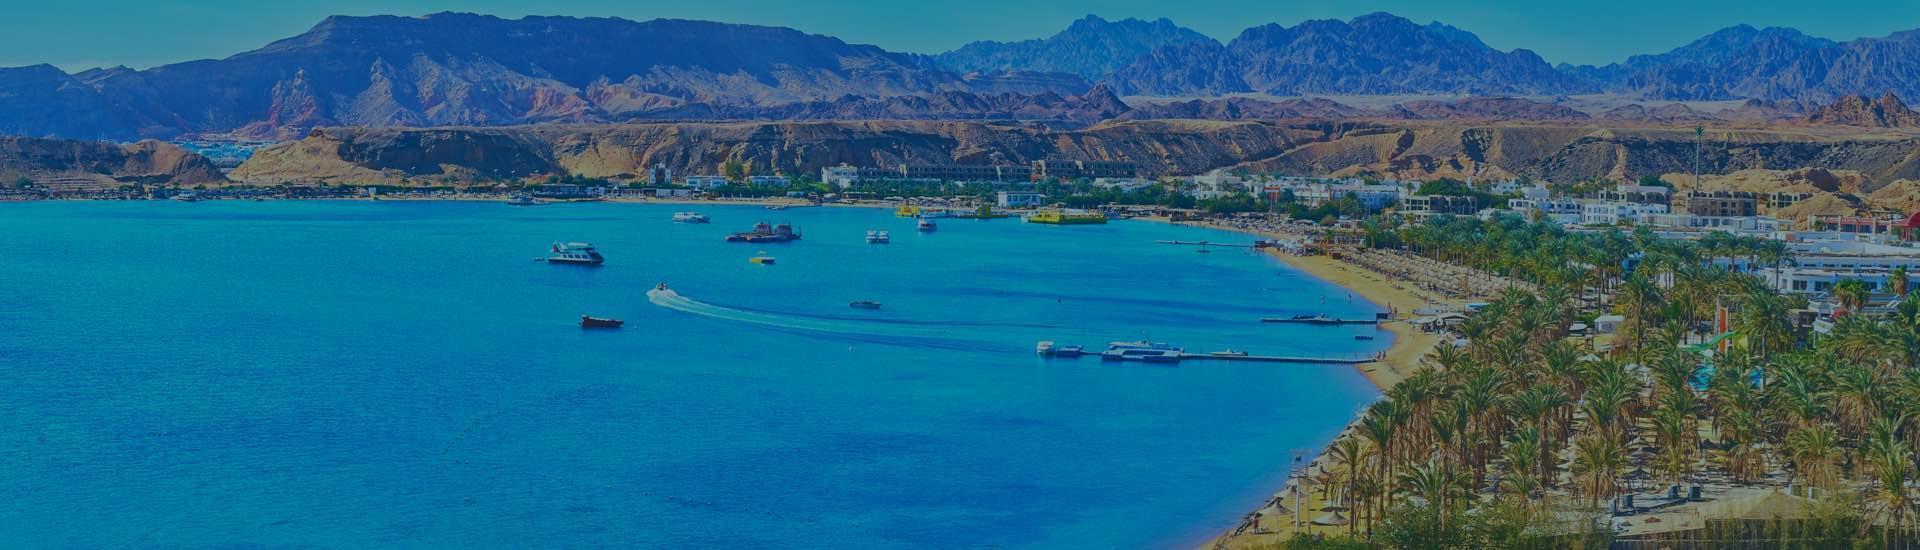 Book Al Ain to Sharm El Sheikh Flights